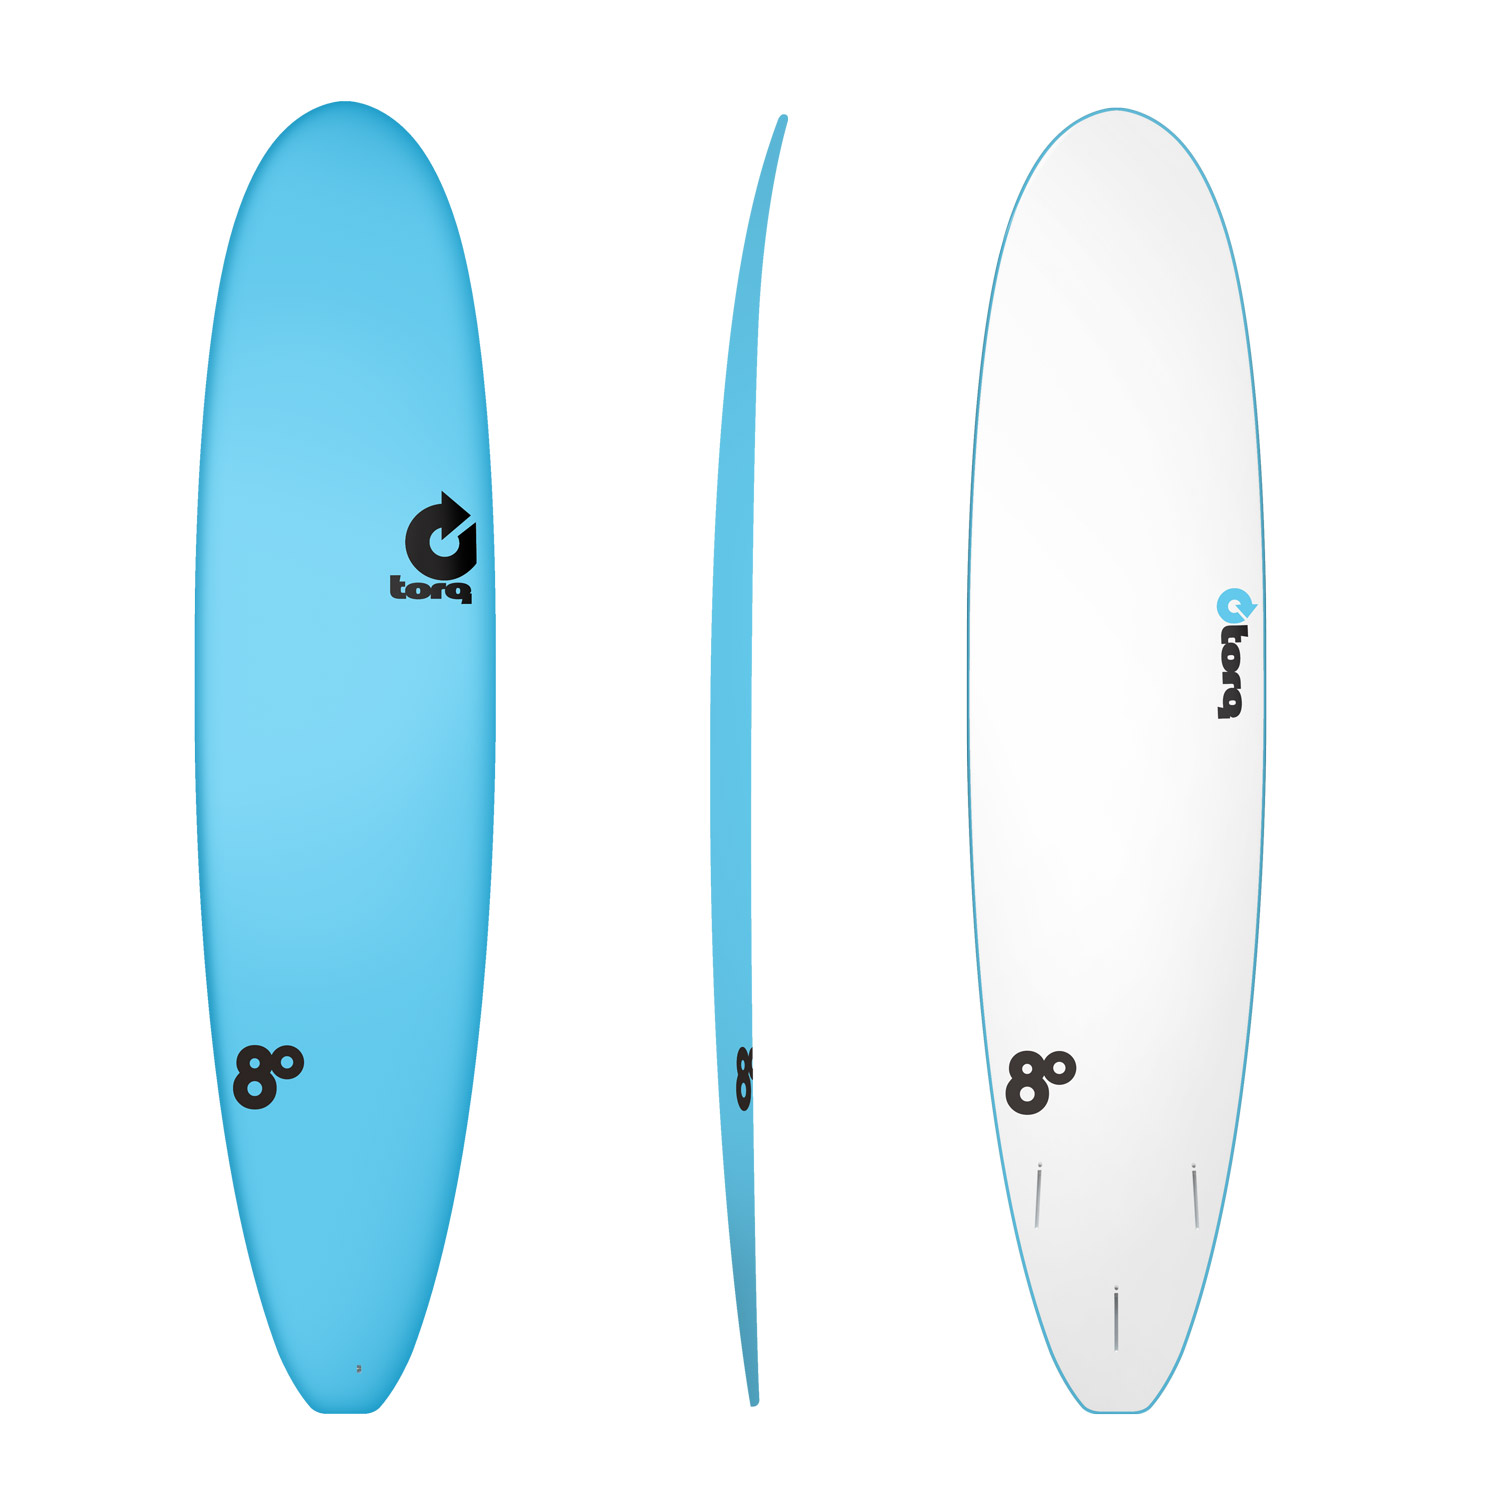 Torq Soft Longboard surfboard – 8'0